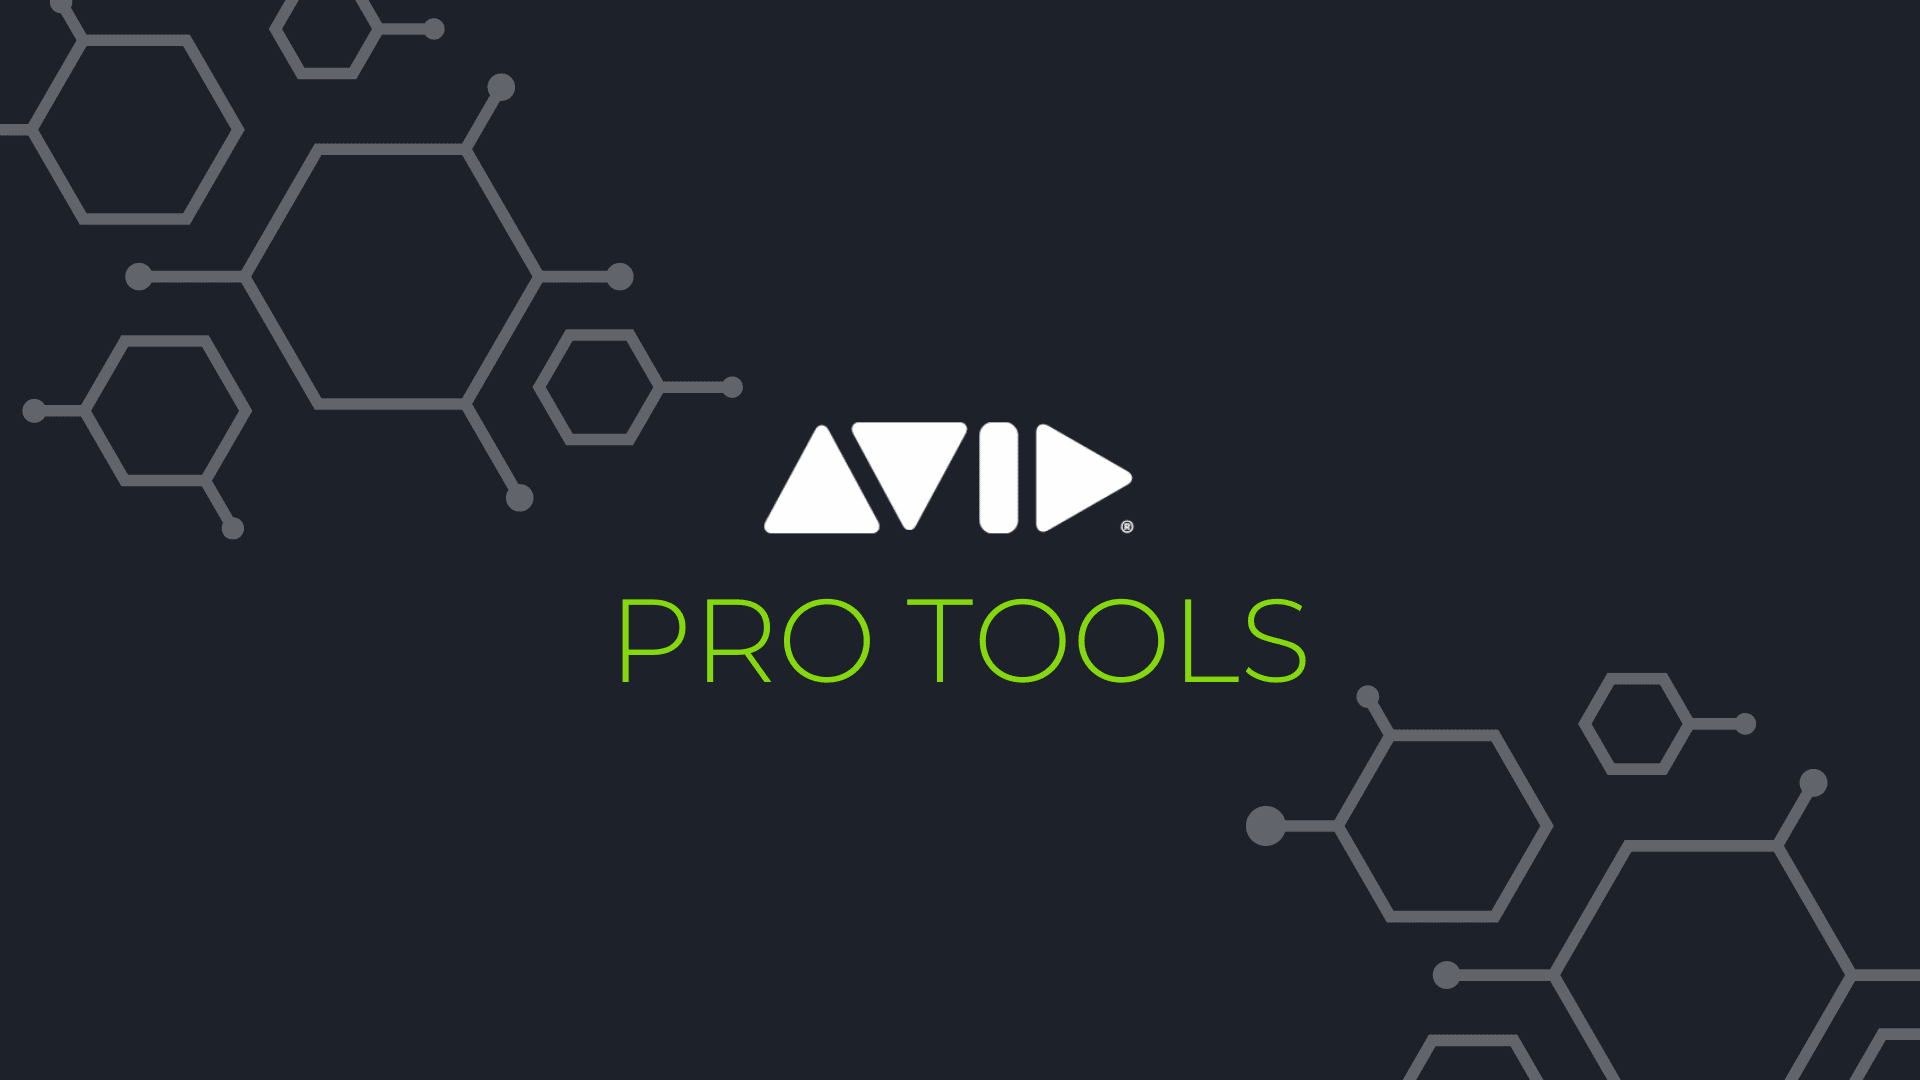 Pro Tools Logo